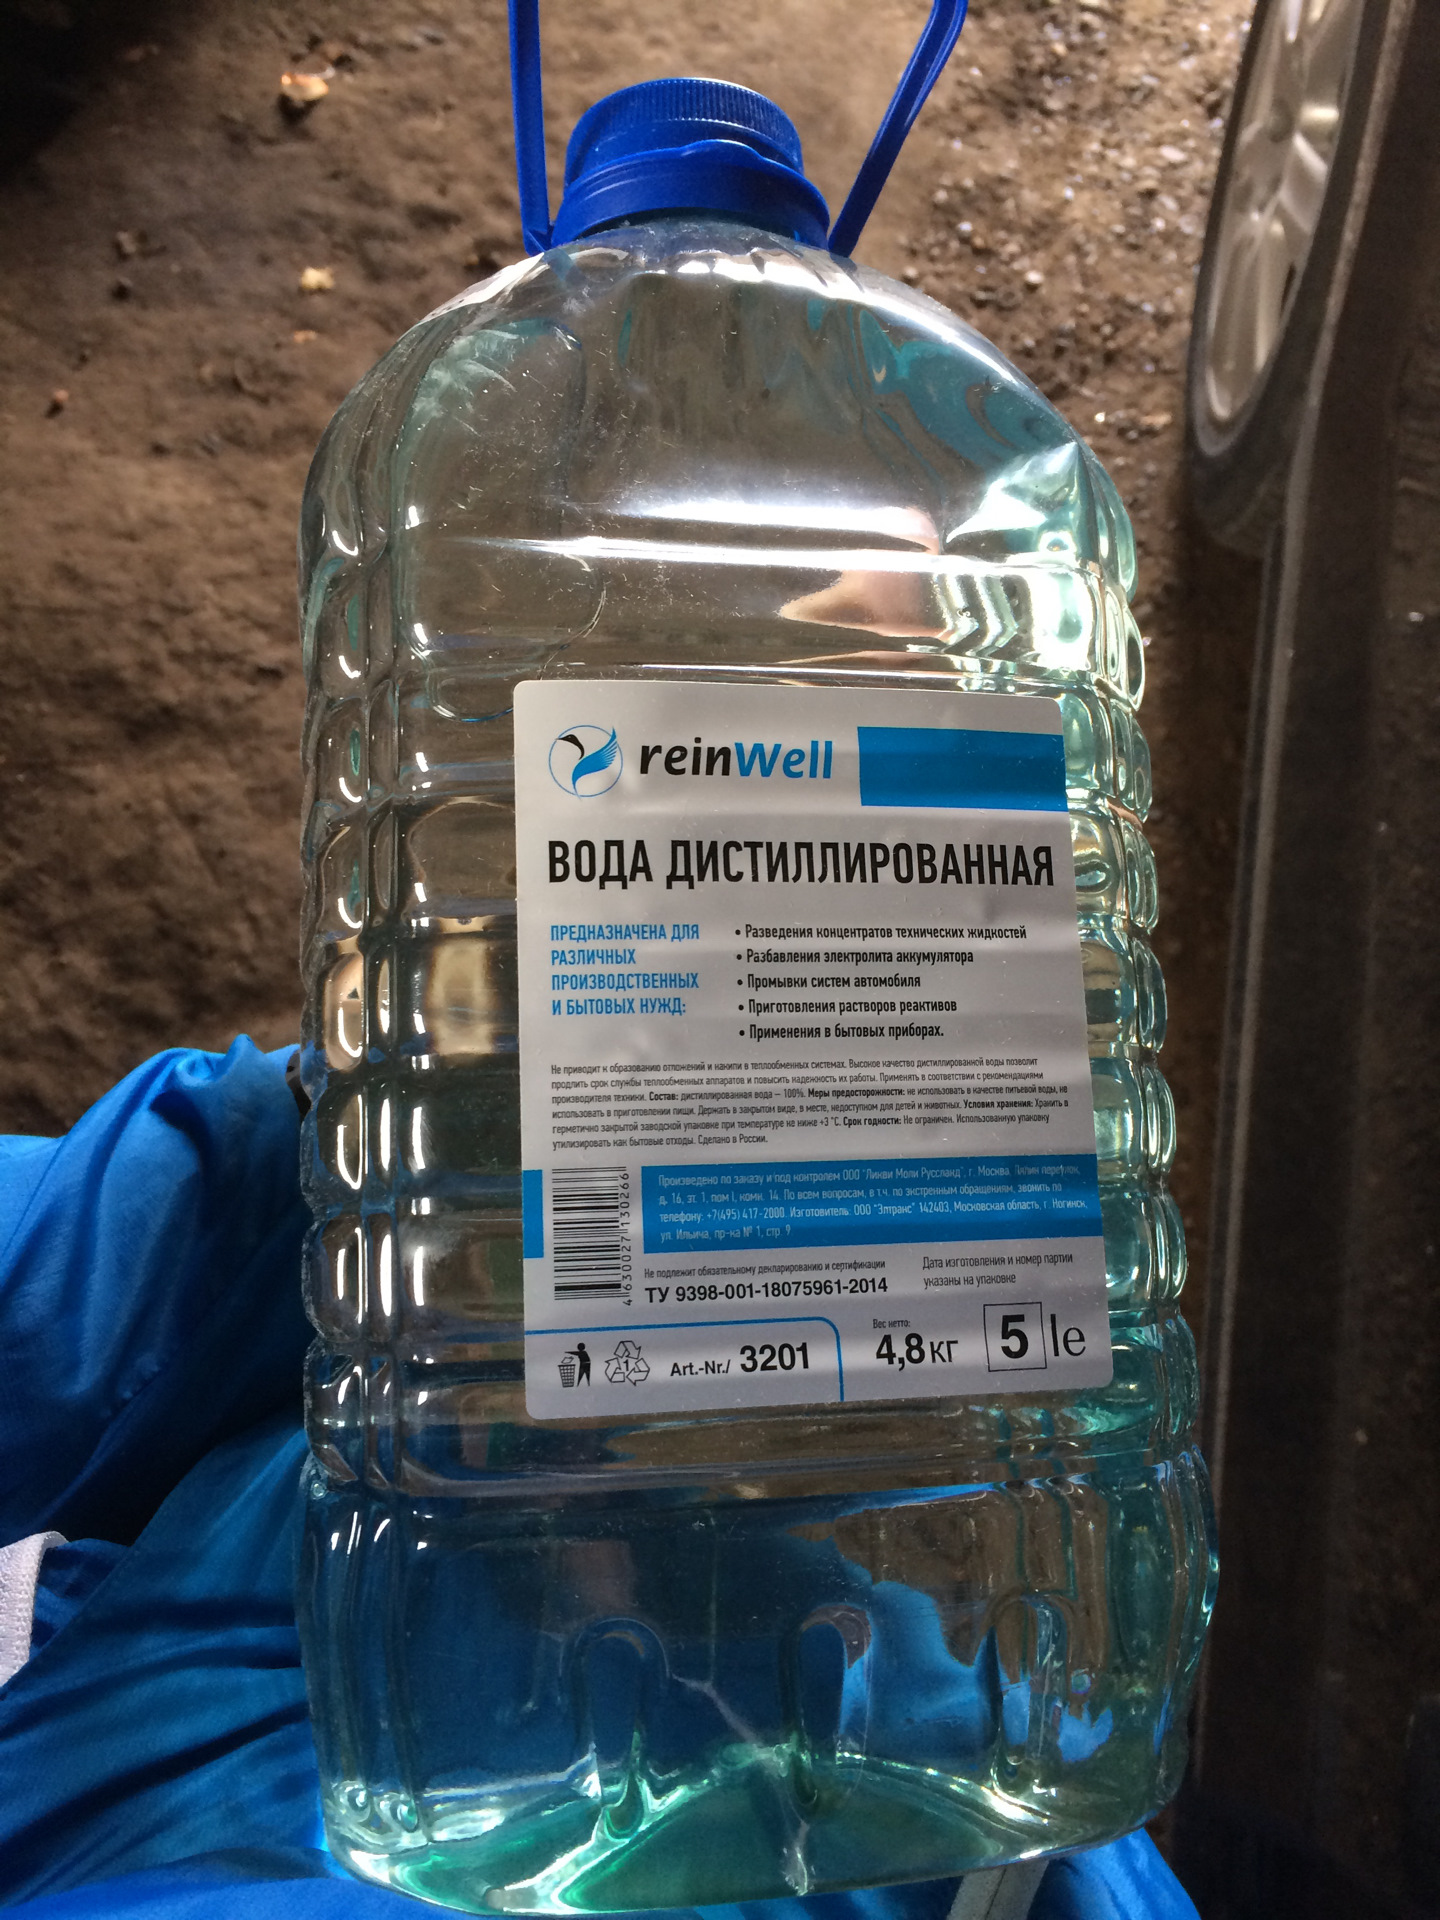 Заряд дистиллированной воды. 3201 REINWELL вода дистиллированная RW-02 (4,8 кг). REINWELL дистилированаяв Ода. Вода дистиллированная VAG. Дистиллированная вода REINWELL RW-02.